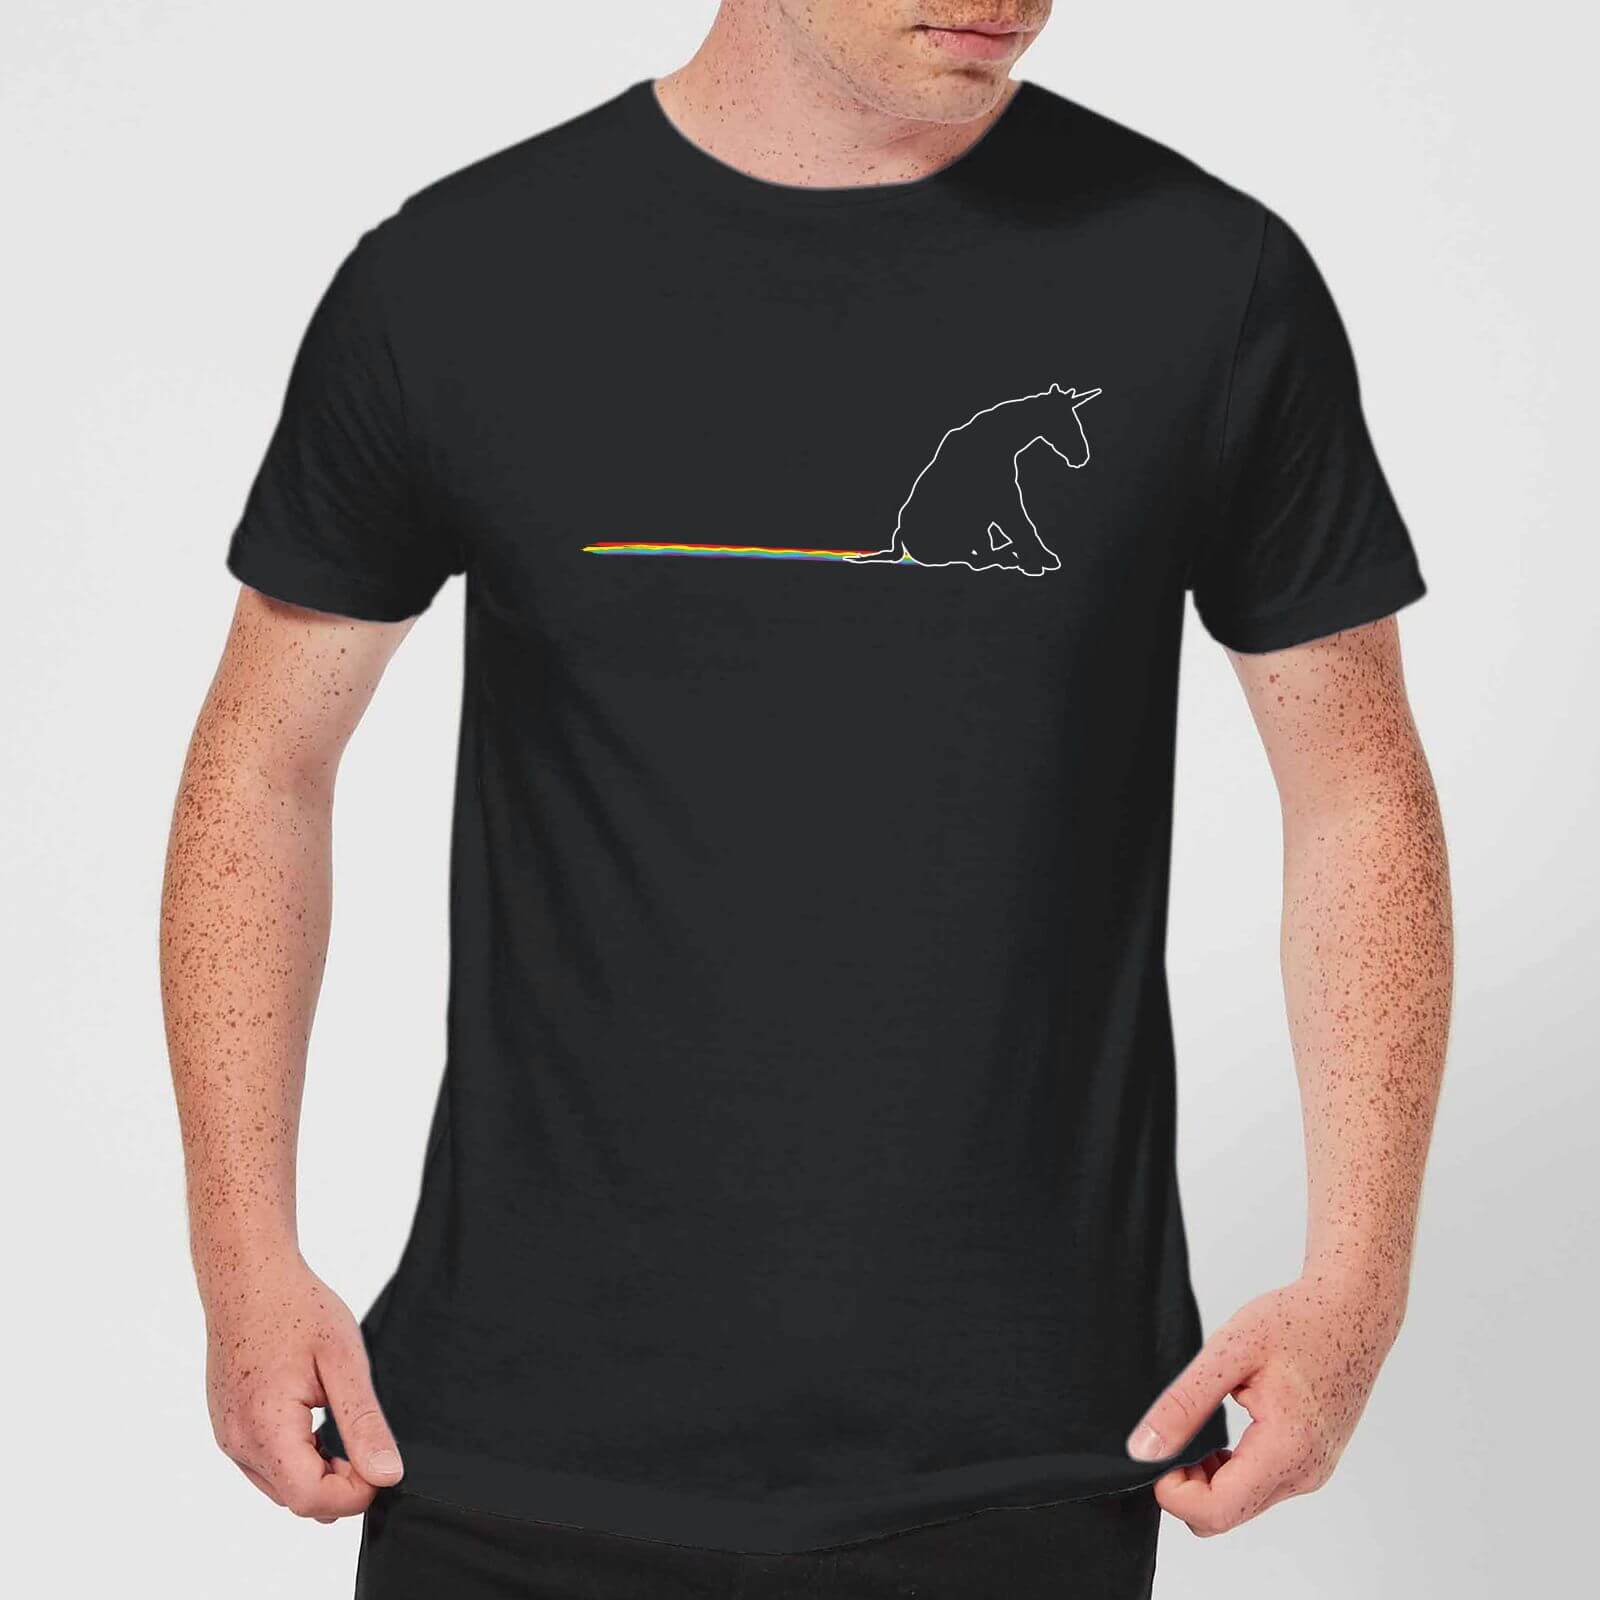 Unicorn Skid Mark T-Shirt - Black - S